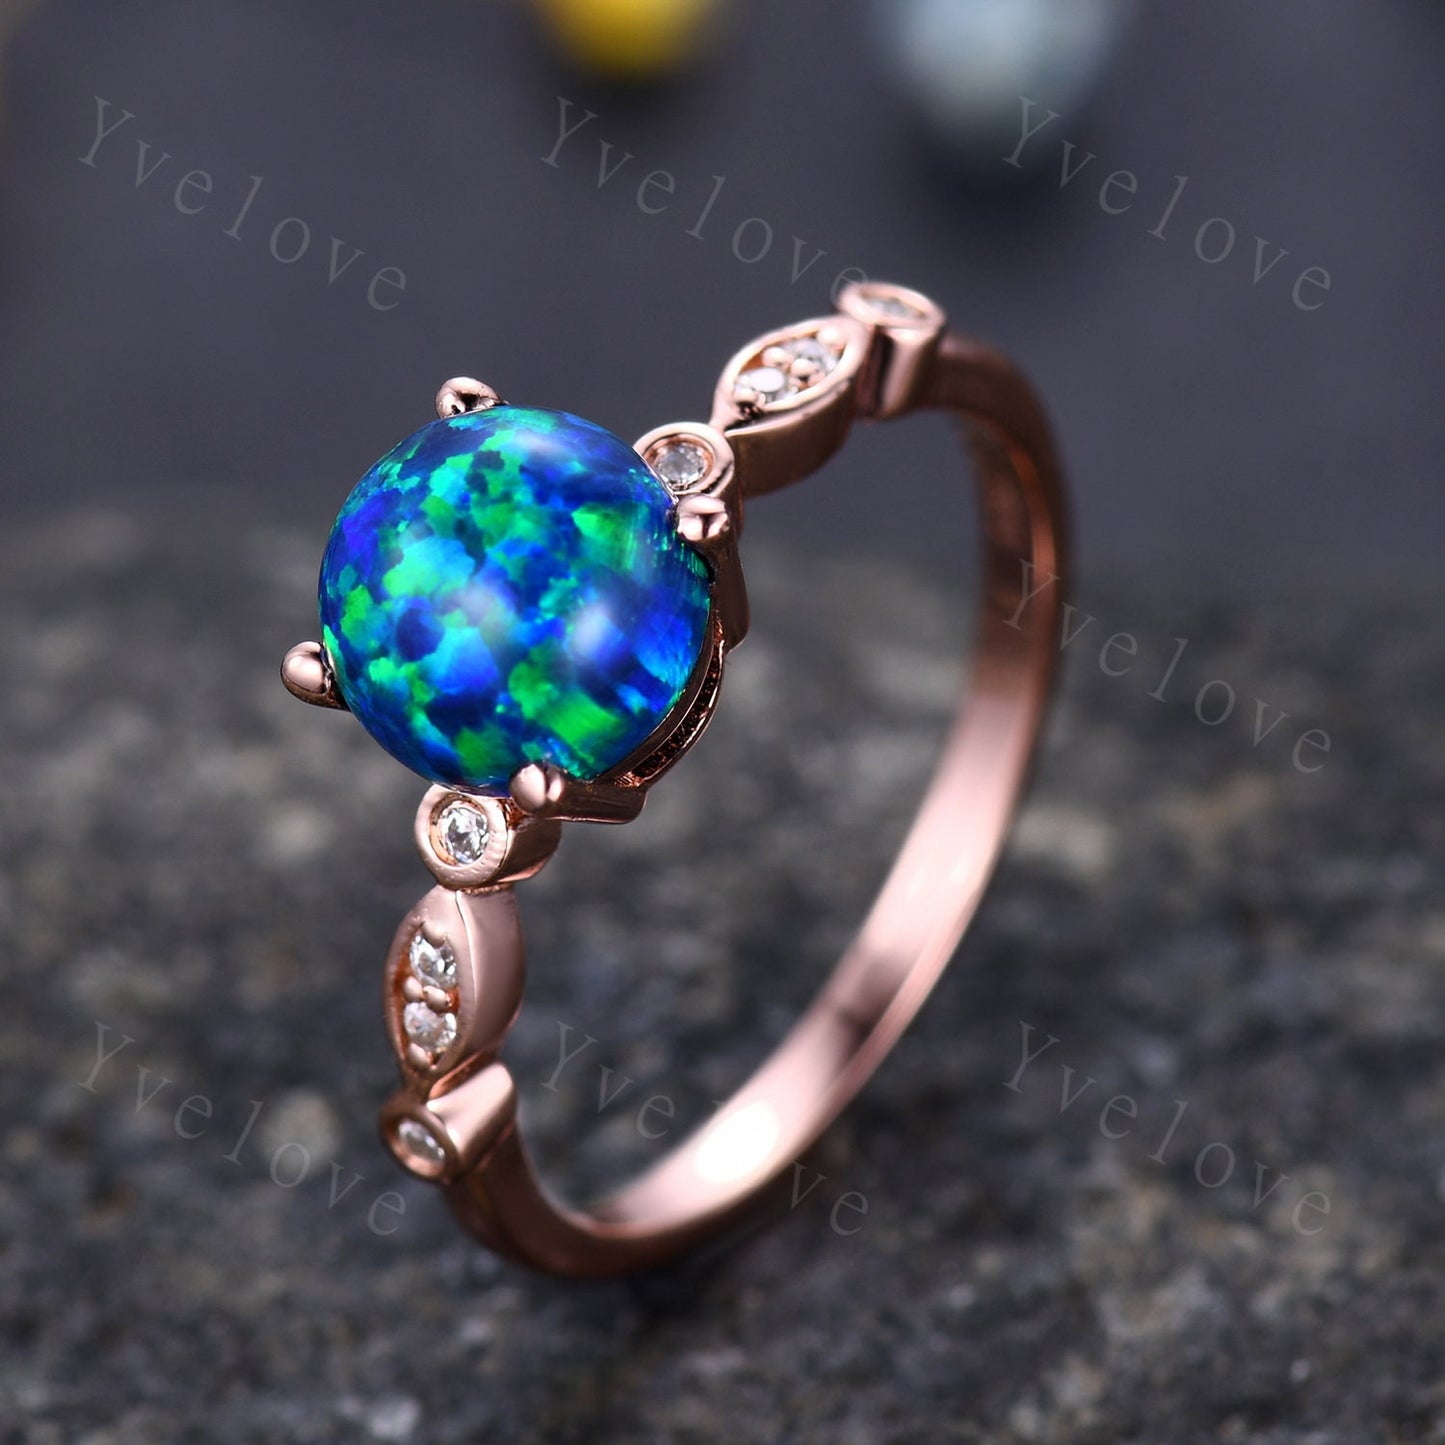 7mm Vintage Black Opal Engagement Ring,Art Deco Ring,Diamond Milgrain Band,Women Bridal Ring Set,Anniversary Jewelry October Birthstone Gift